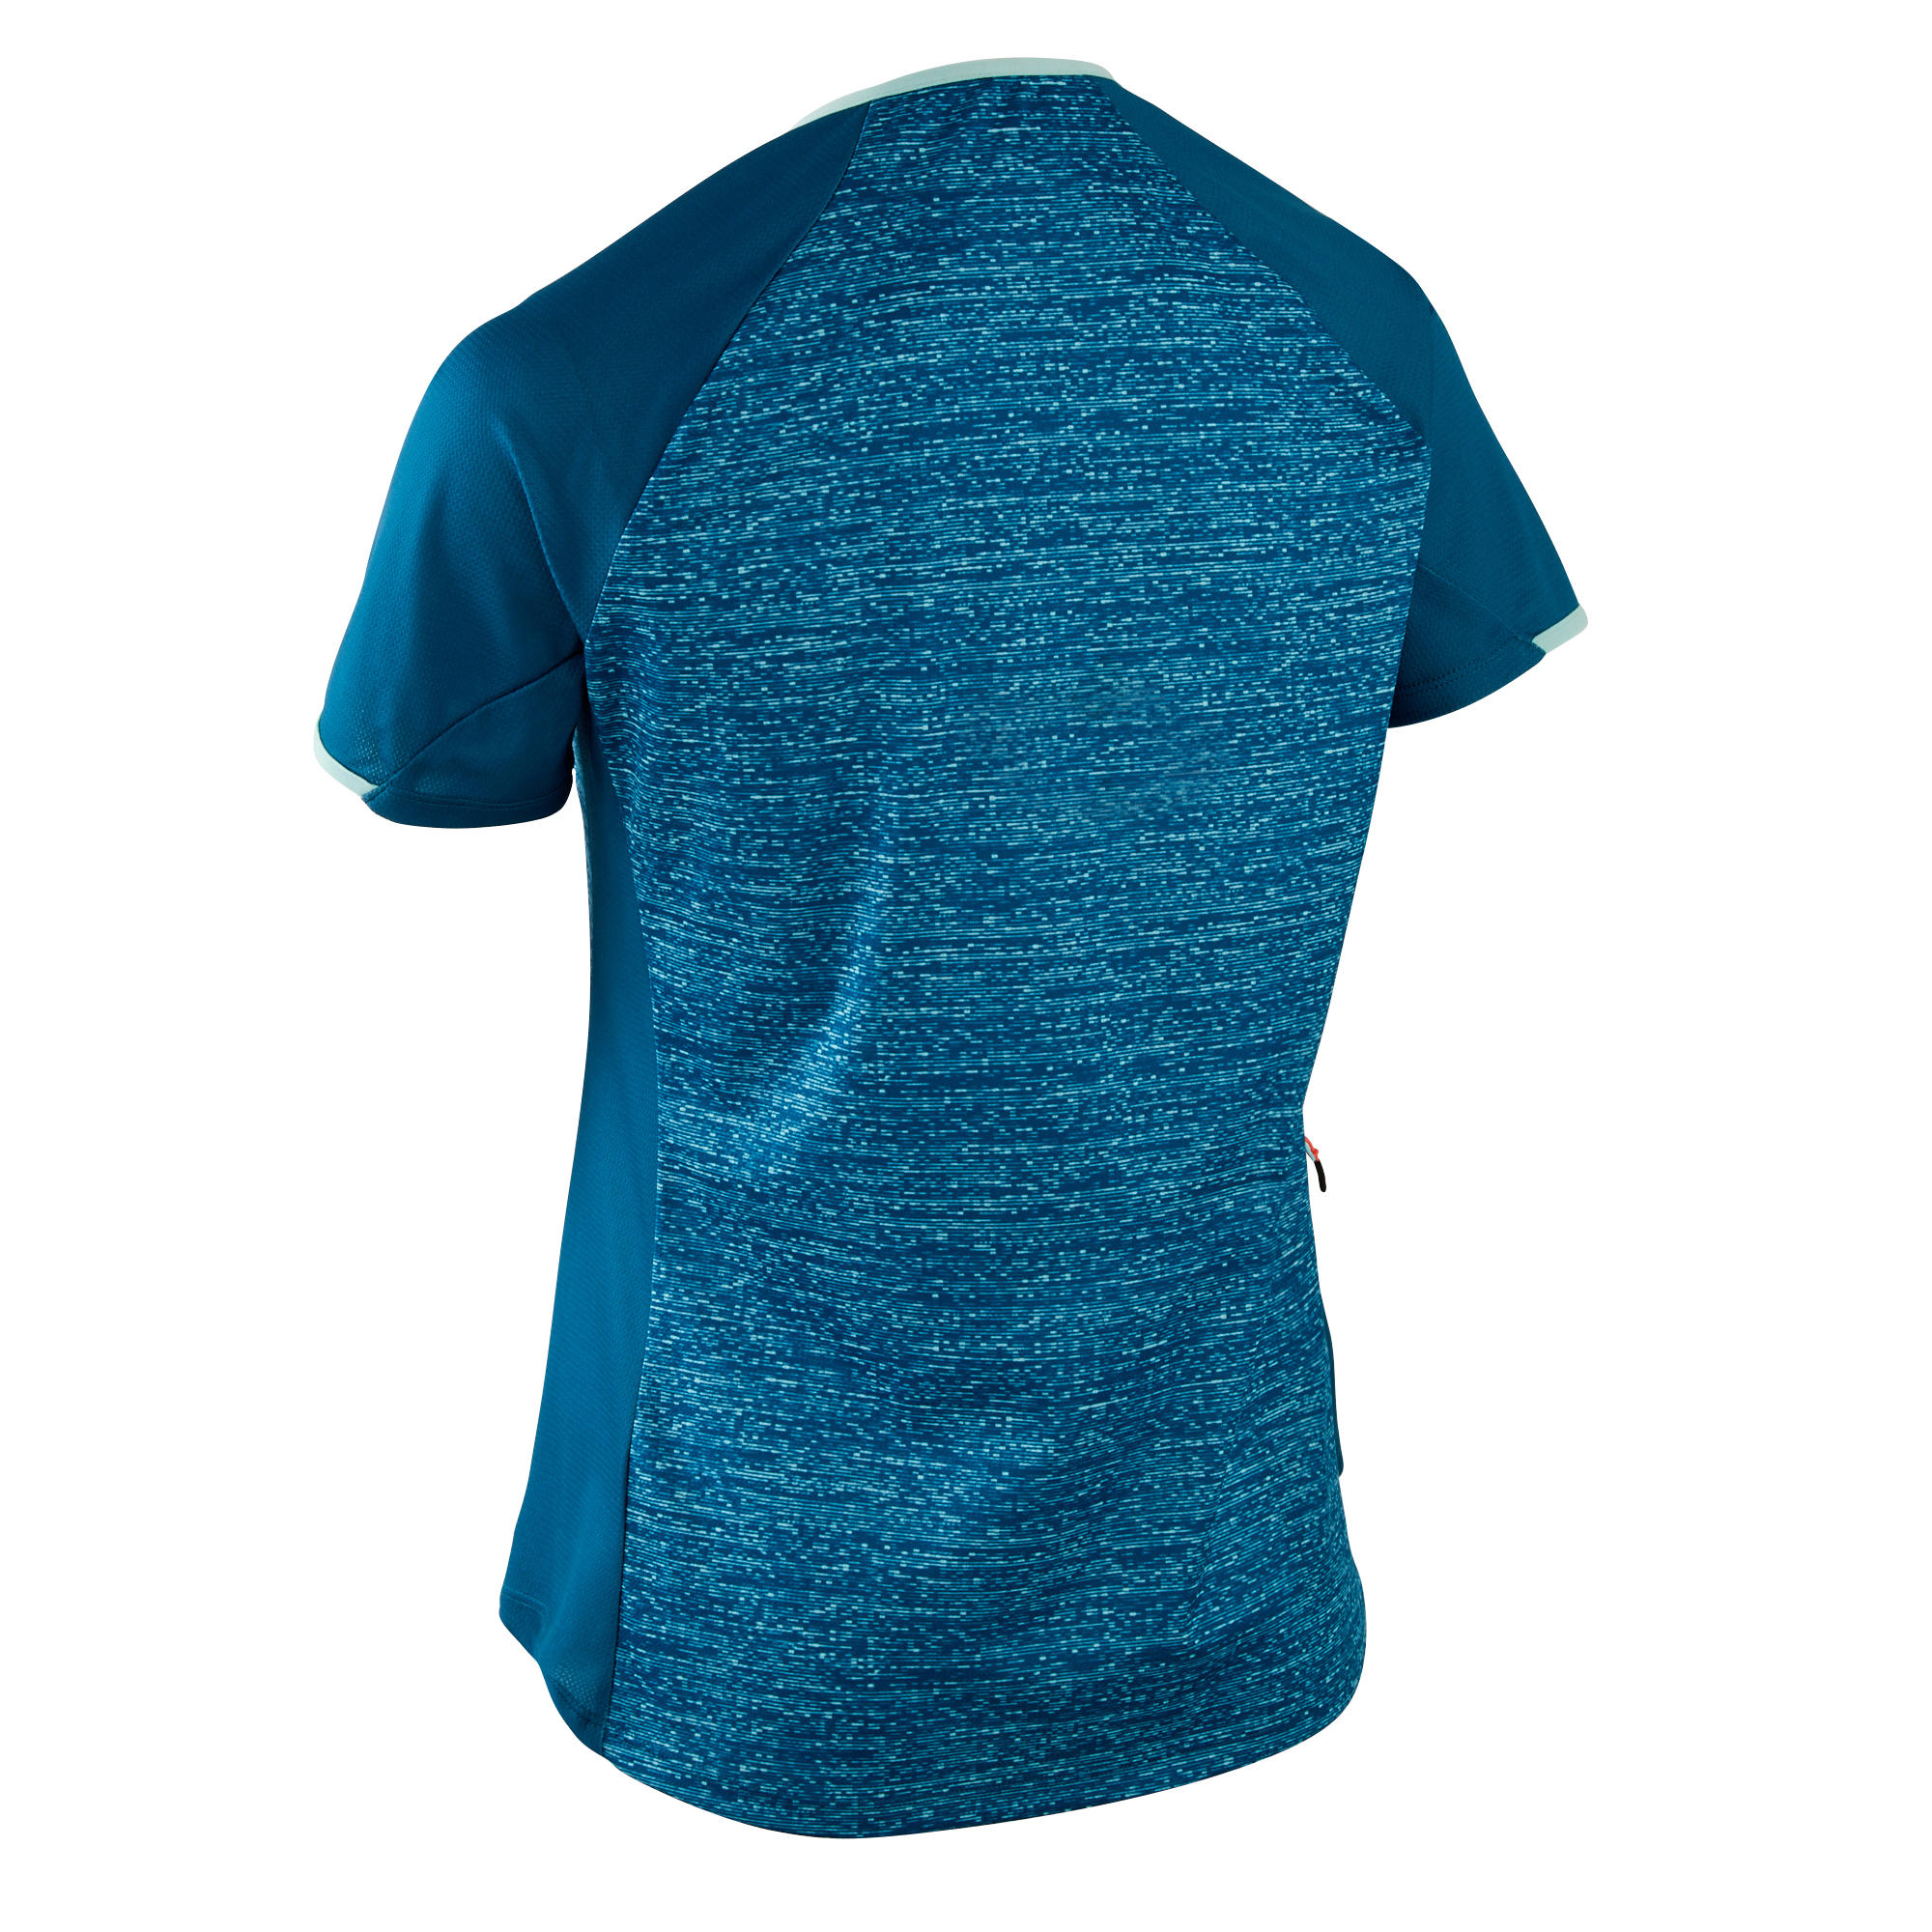 Women's Short-Sleeved Mountain Bike Jersey ST 100 - Turquoise 6/13